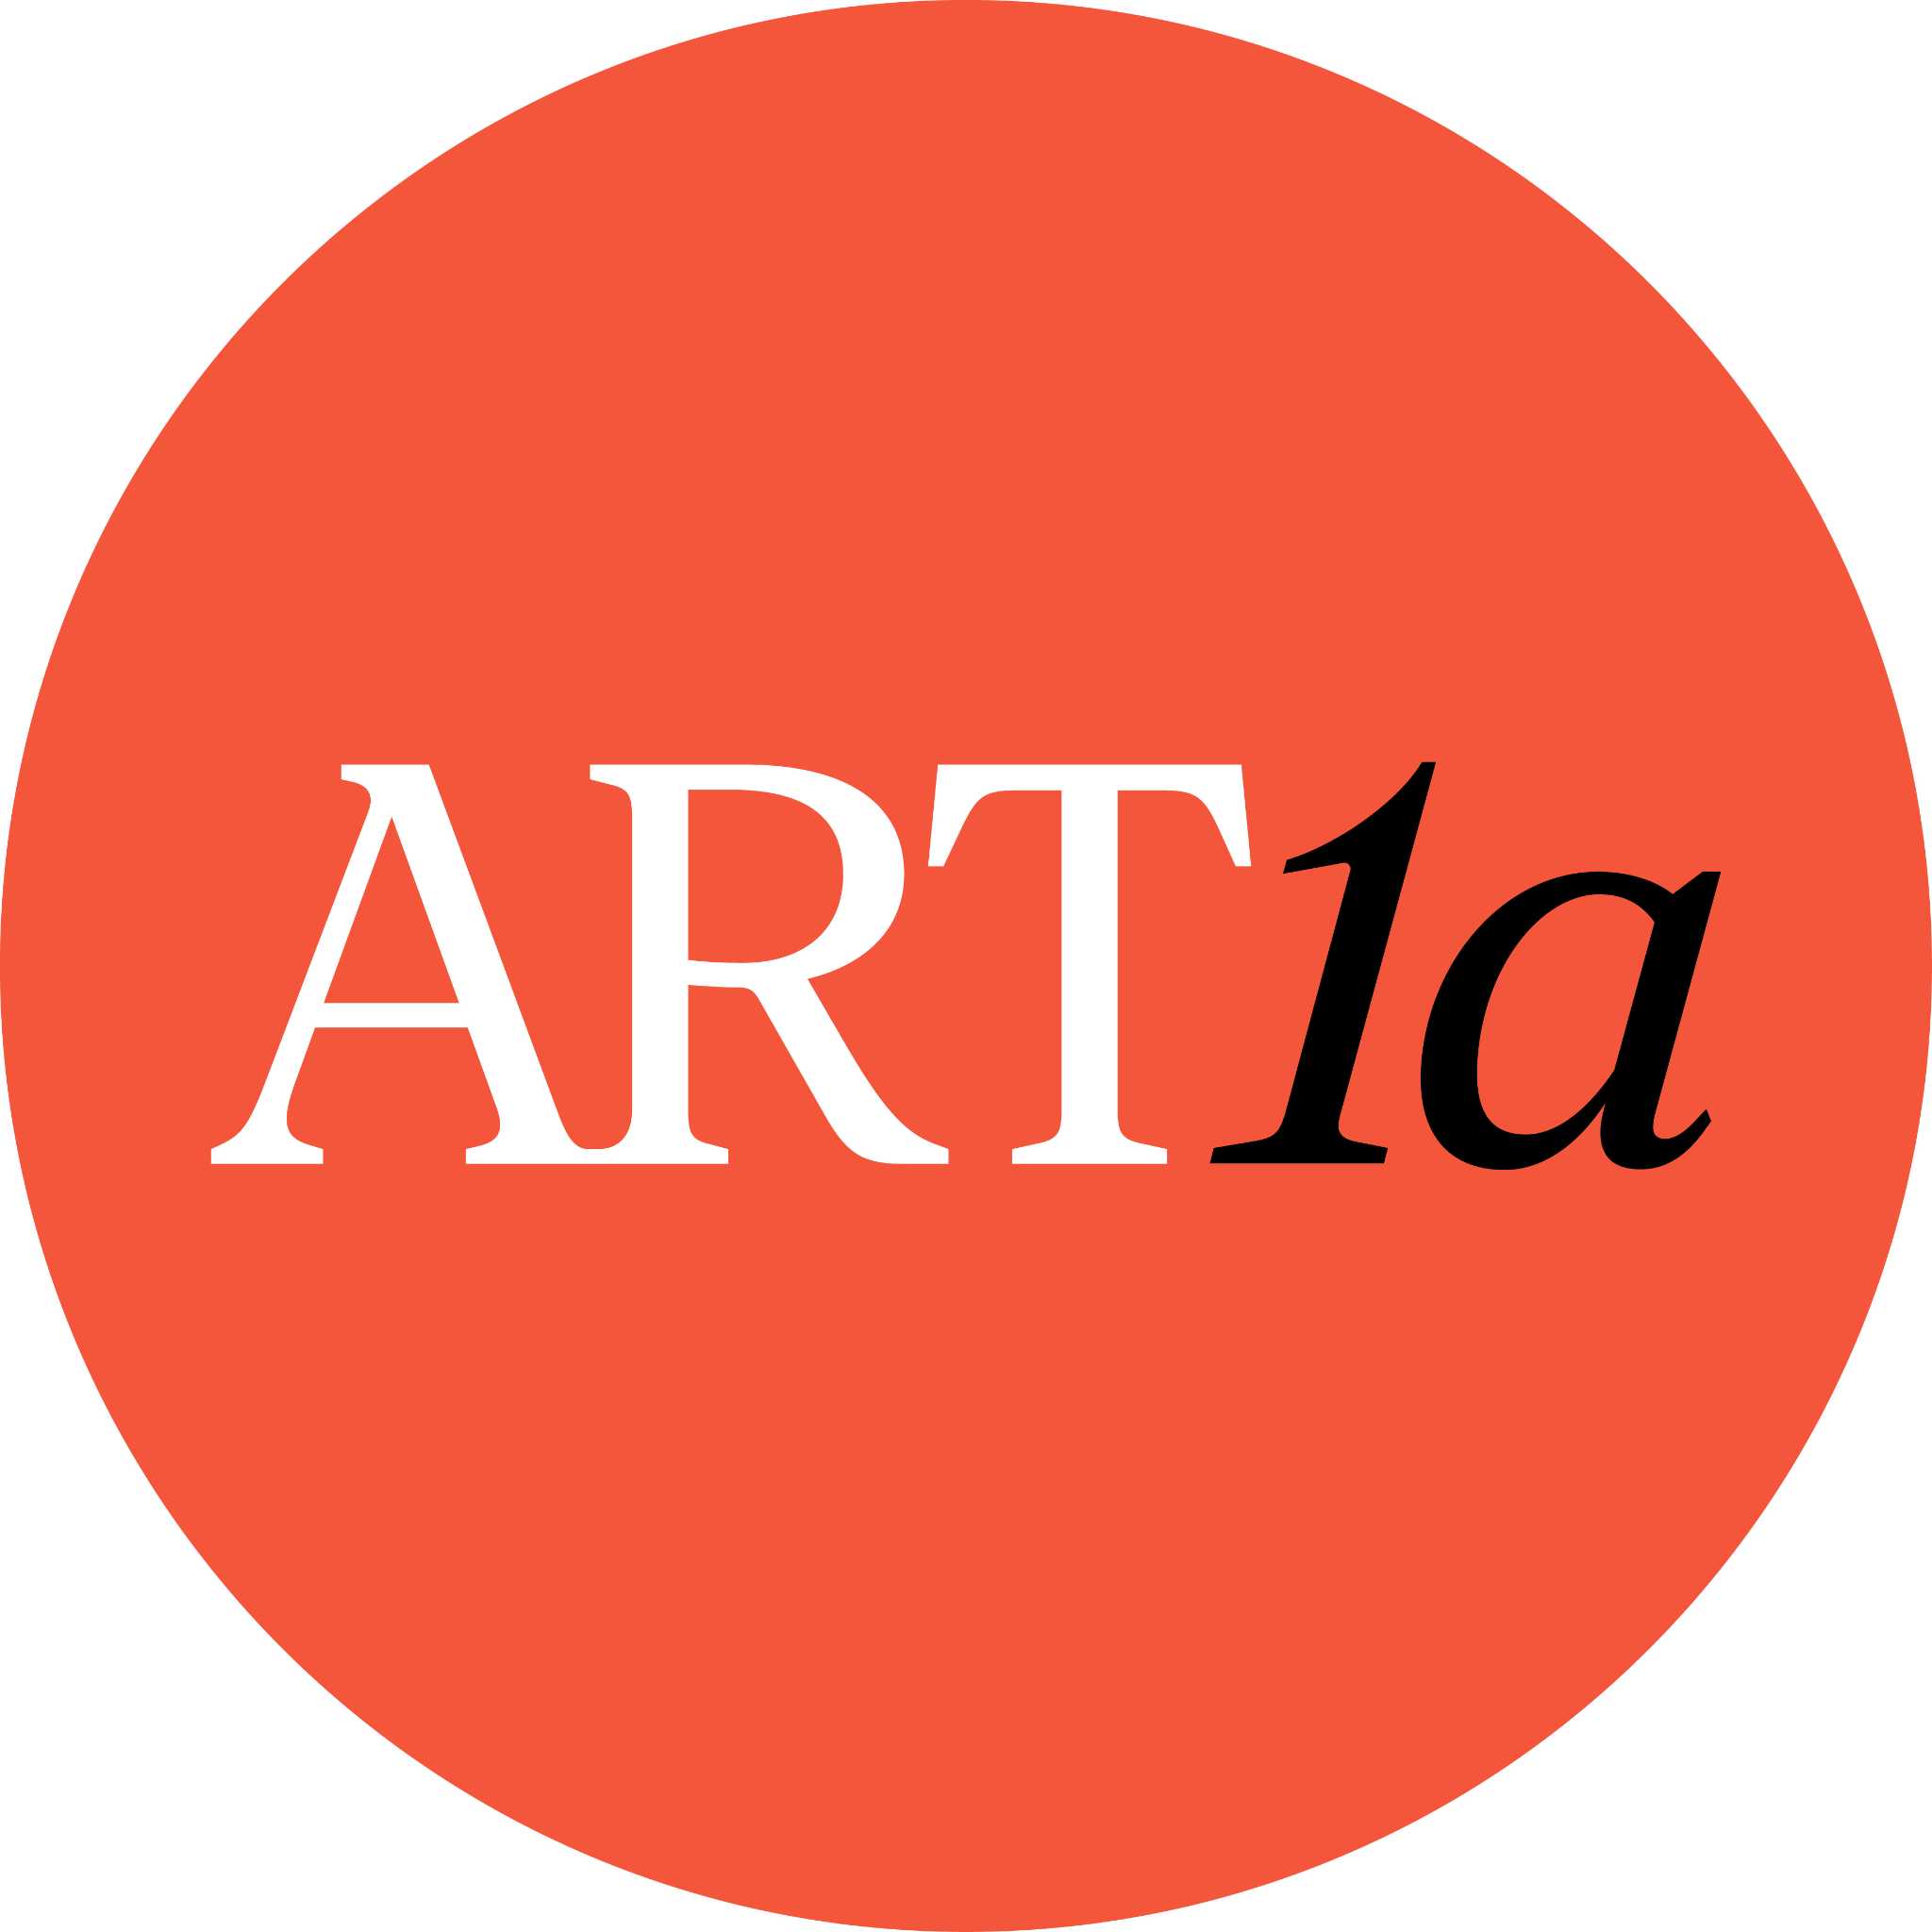 ART1a Art in Residence